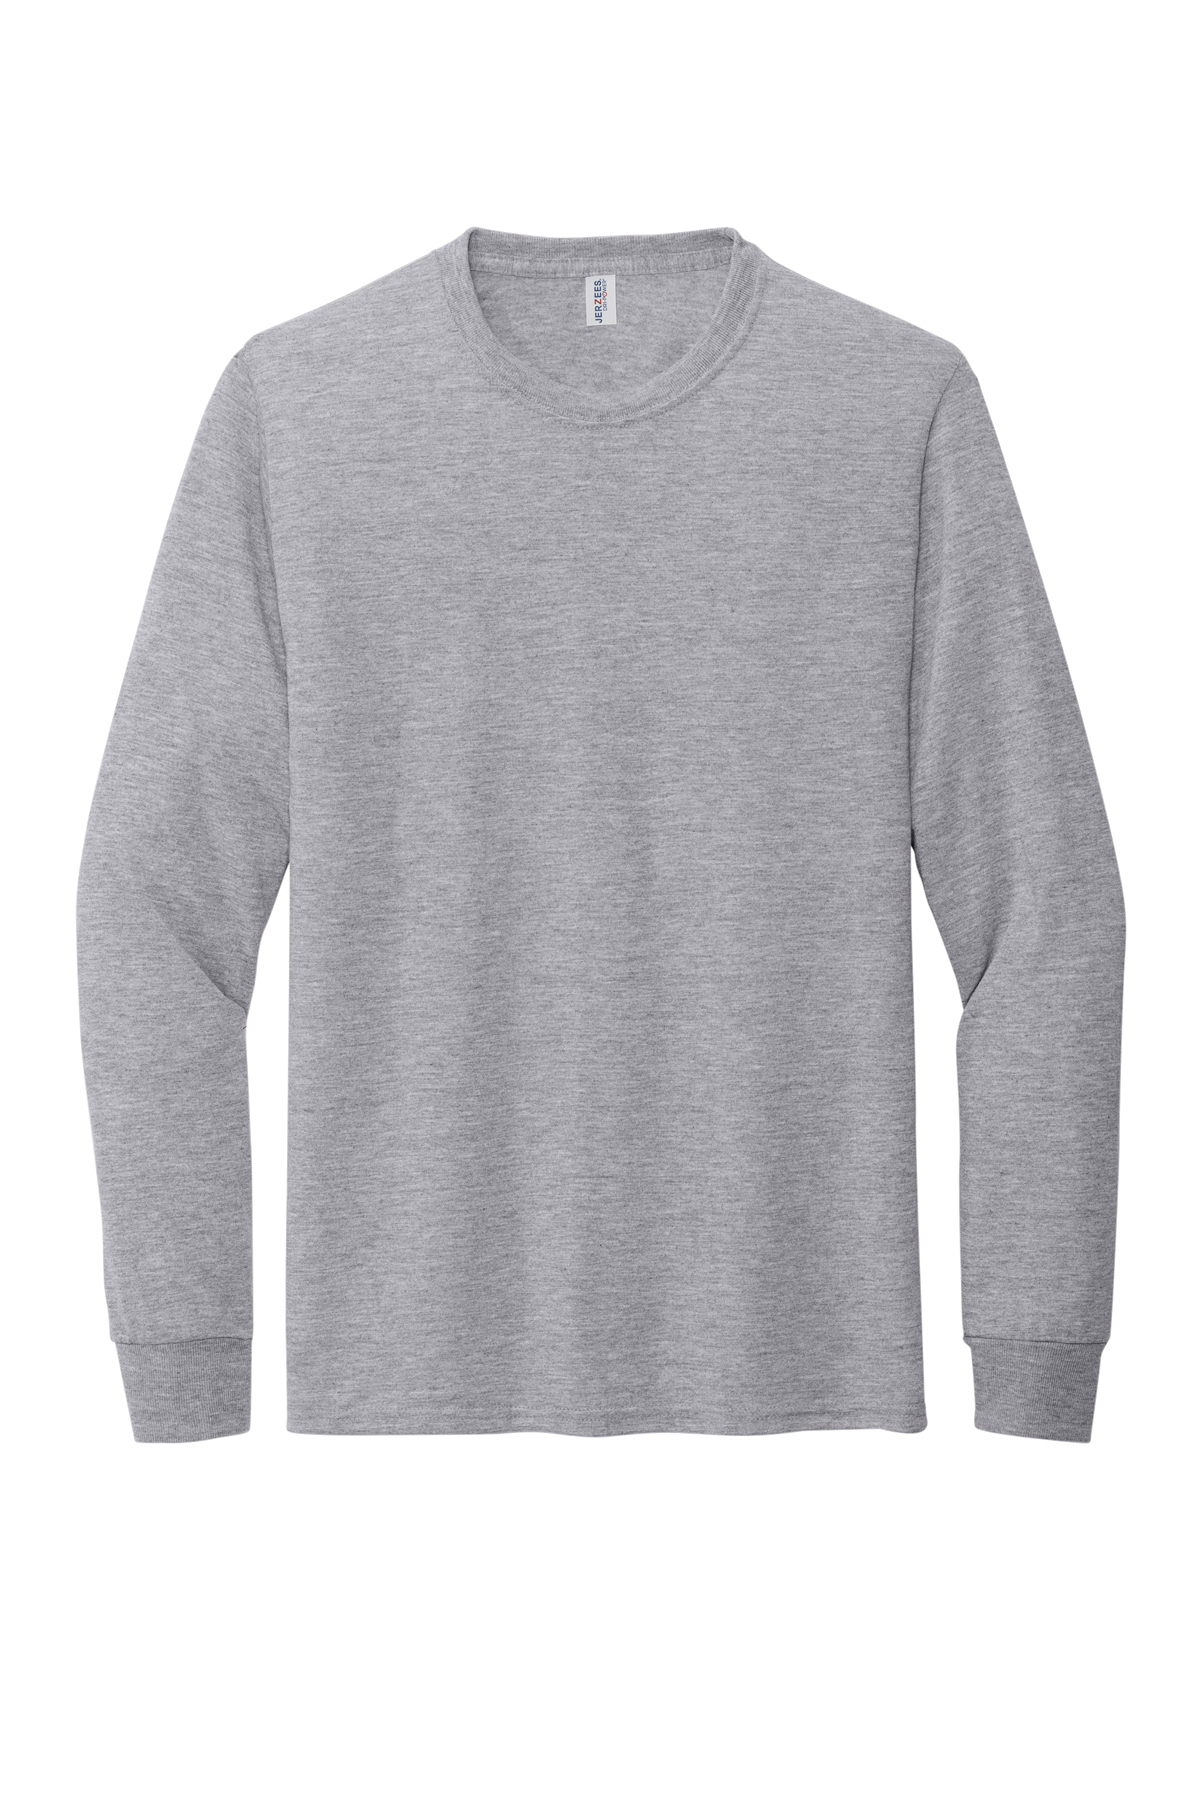 Jerzees Dri-Power 100% Polyester Long Sleeve T-Shirt | Product | SanMar